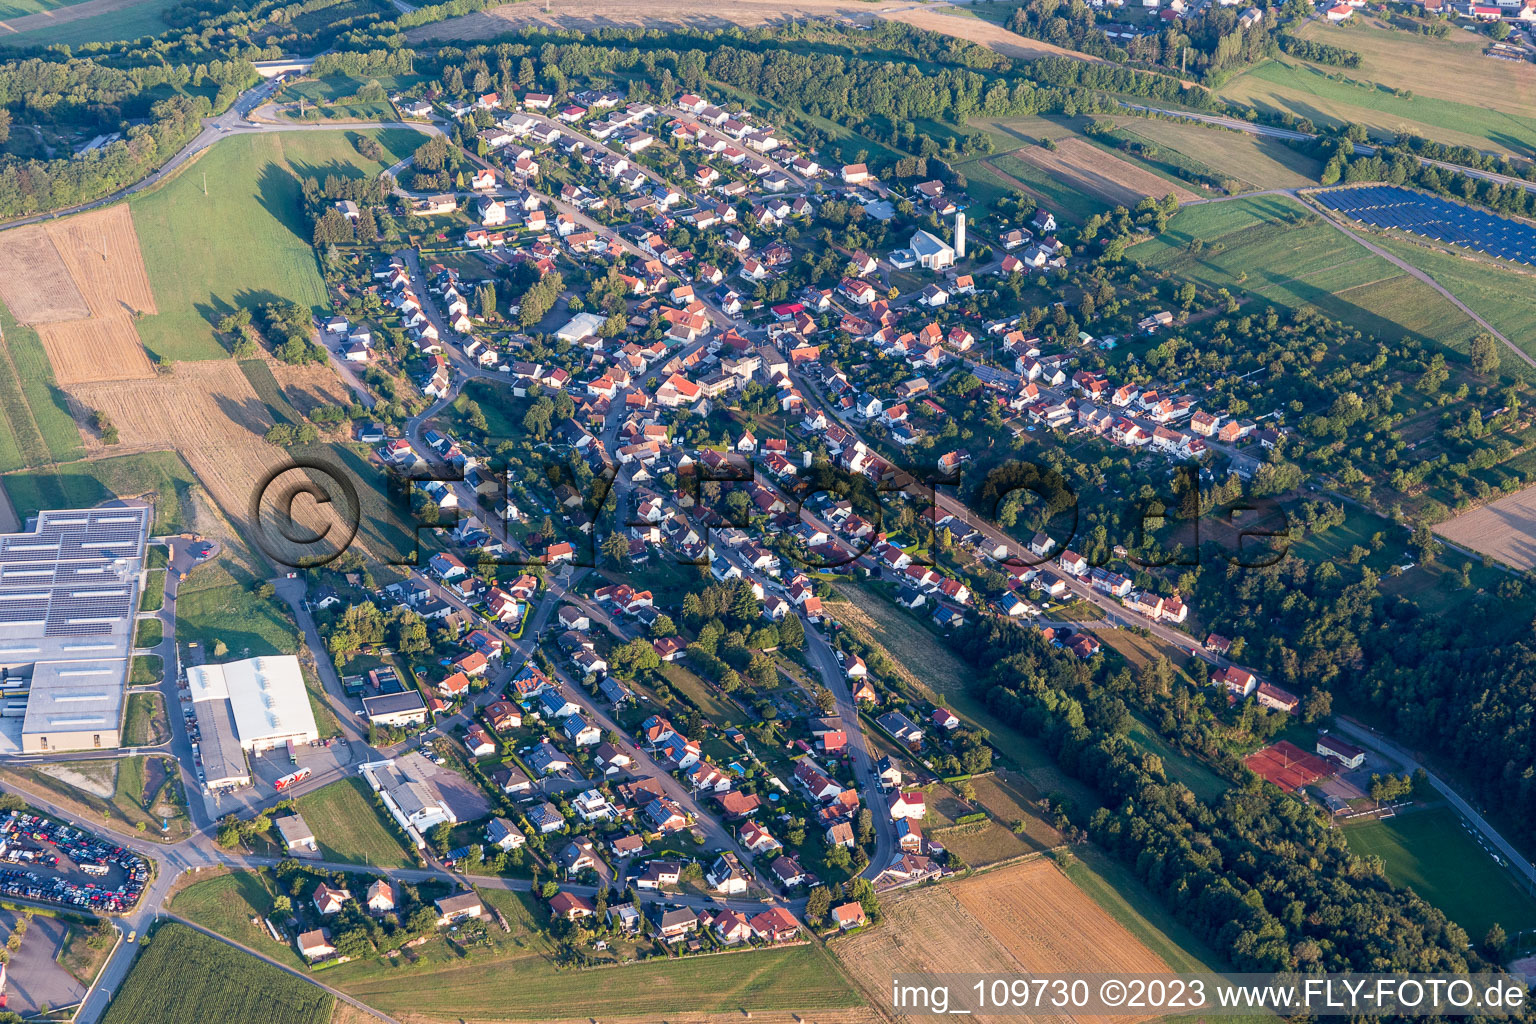 Petersberg in the state Rhineland-Palatinate, Germany